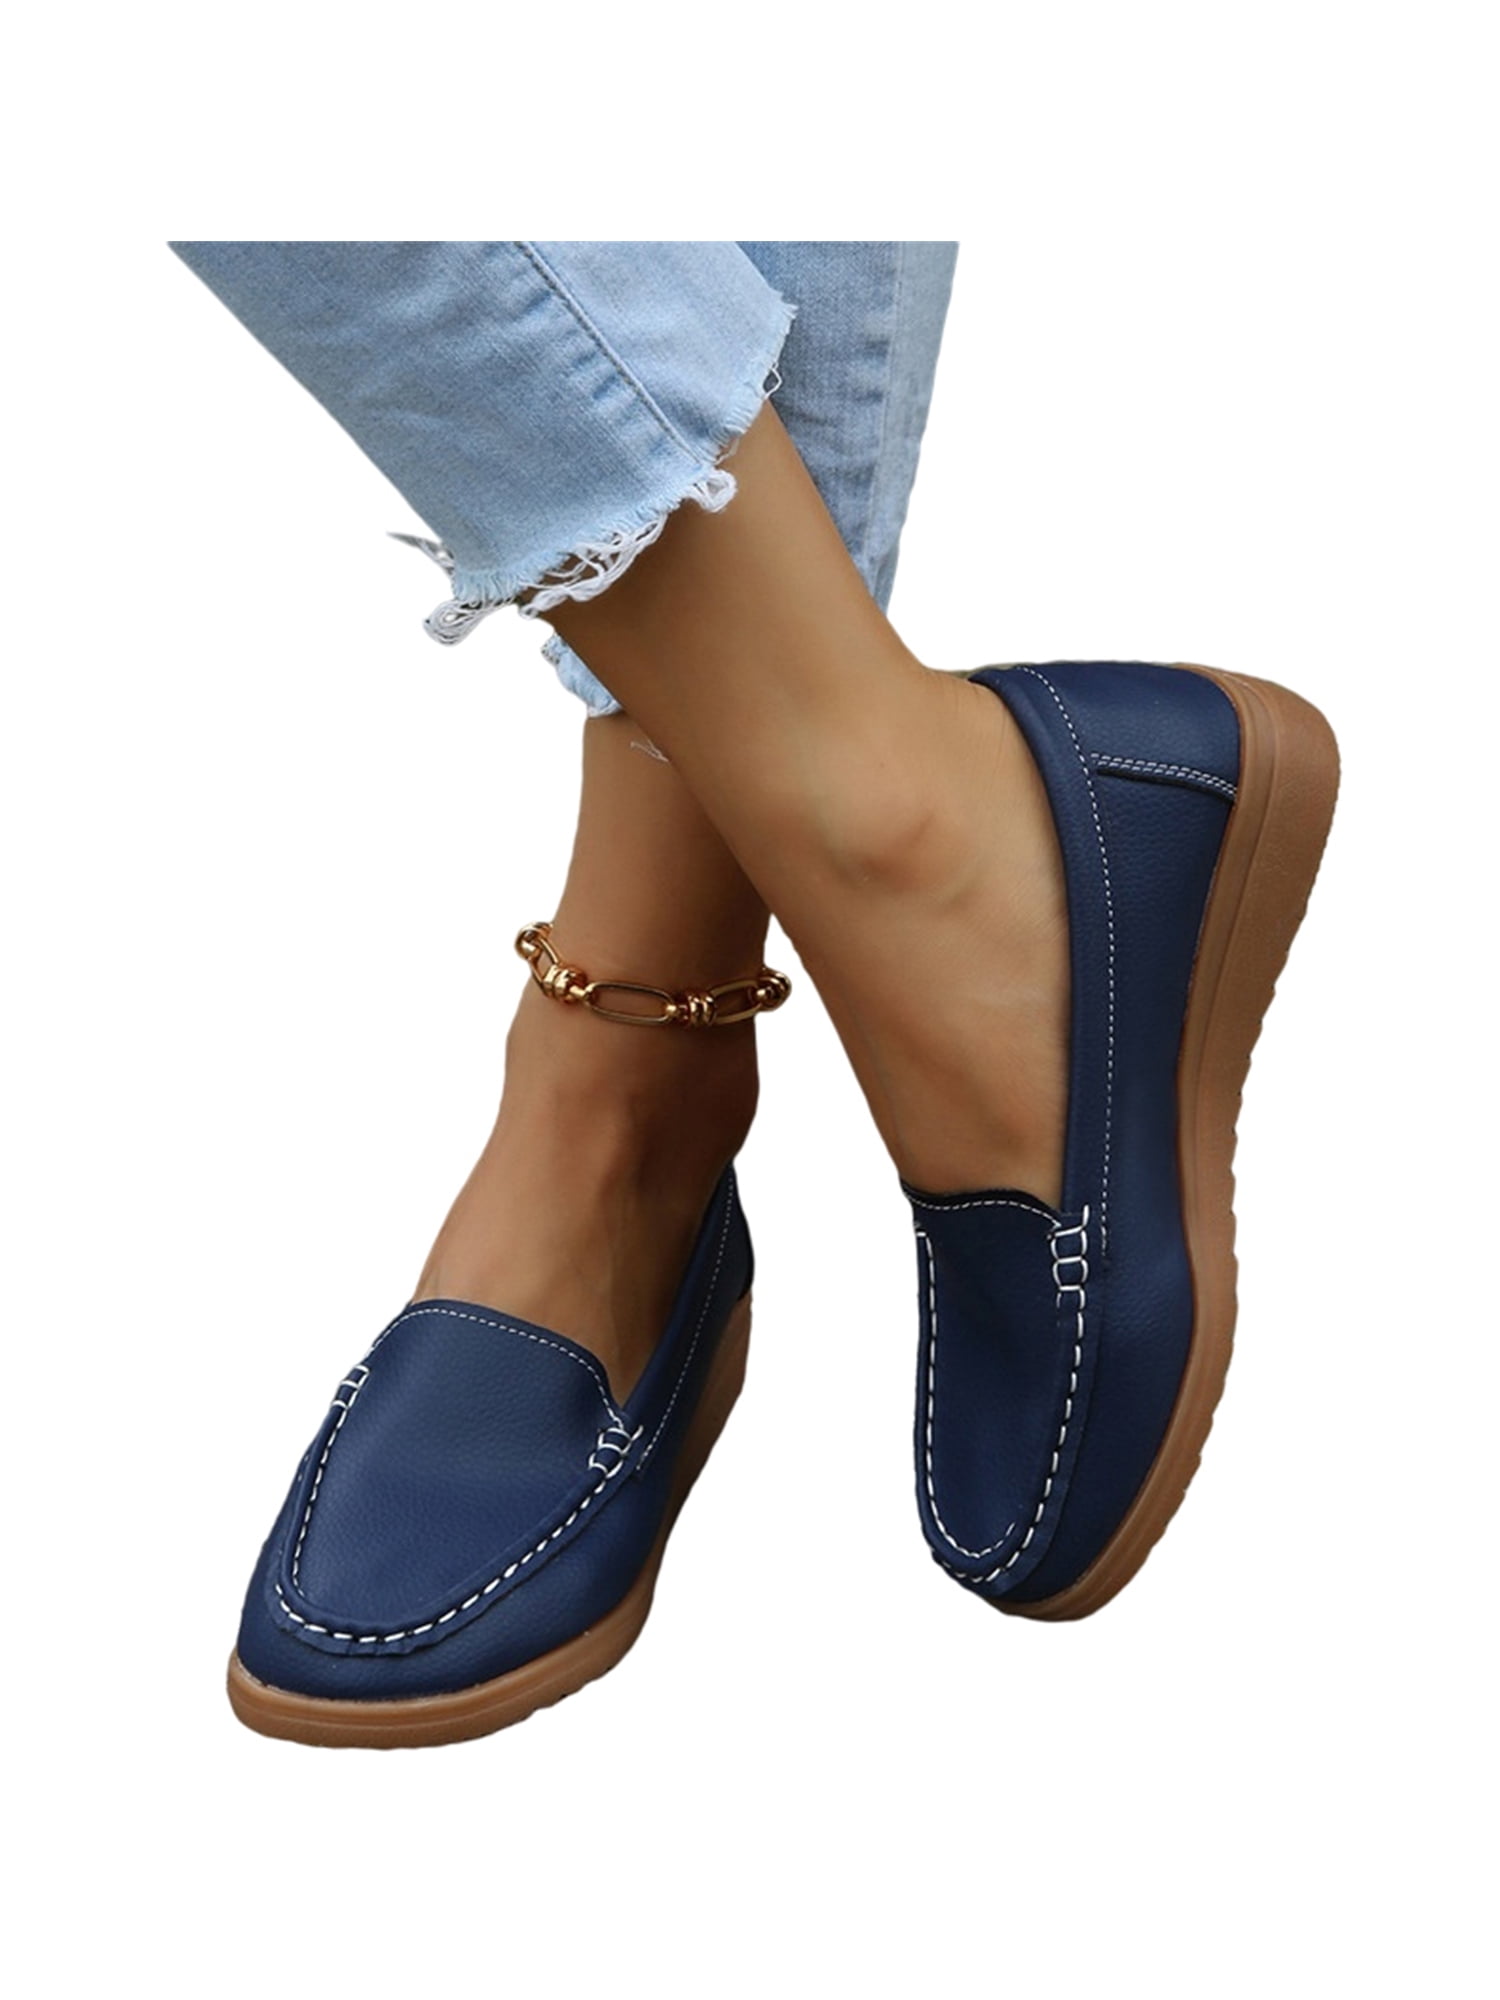 Eloshman Loafer Flats for Black Casual Slip-on Boat Shoes Comfort Flat Driving Walking Moccasins Blue - Walmart.com